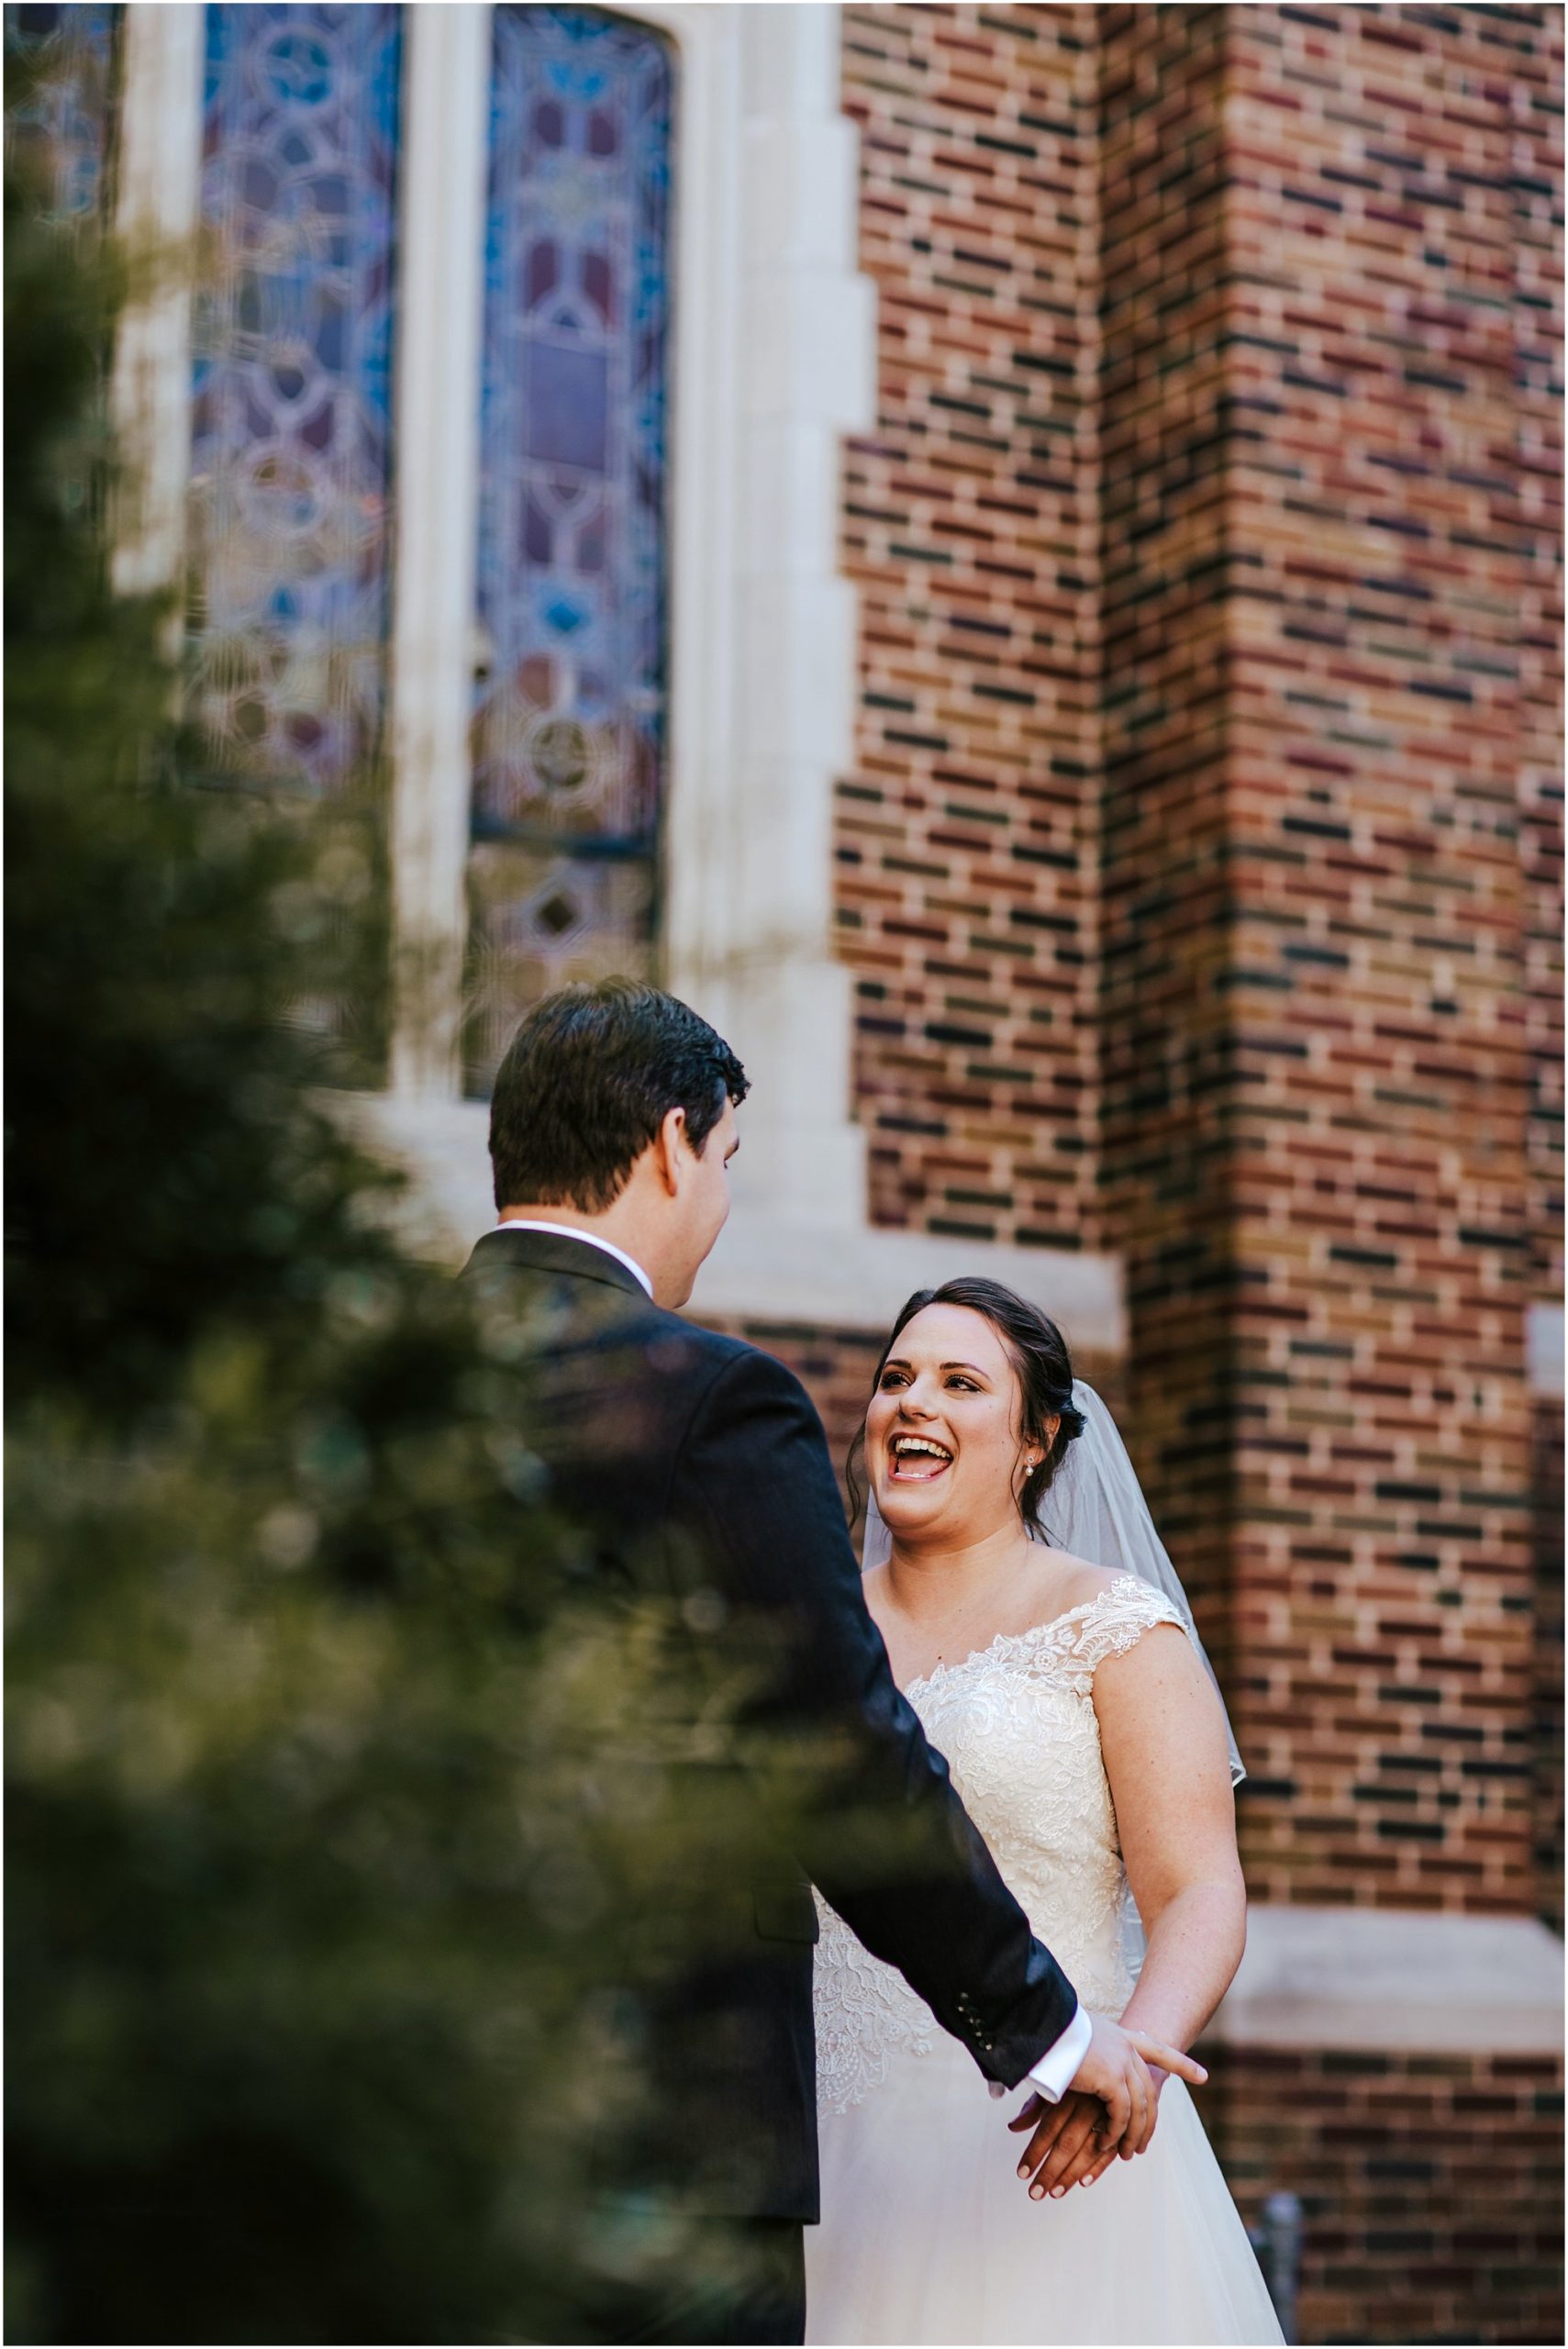 Bride laughing at her groom outside of St Luke's church